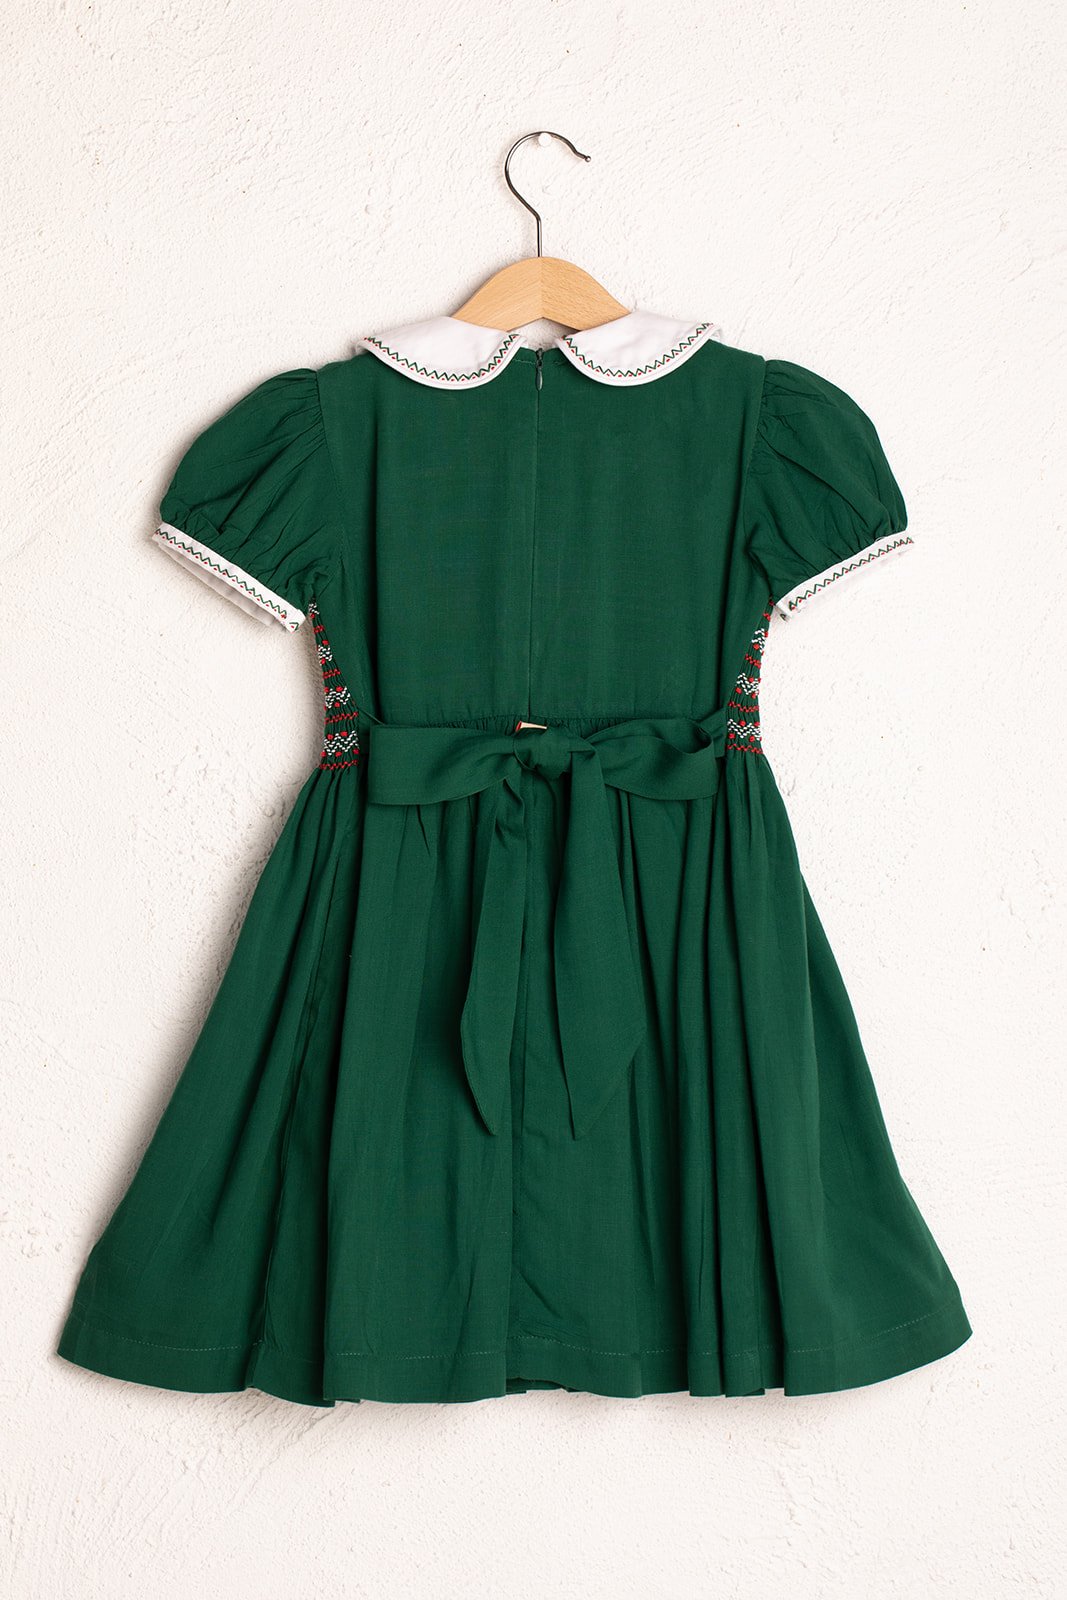 Dot & Mila Green Smocked Dress Size 4